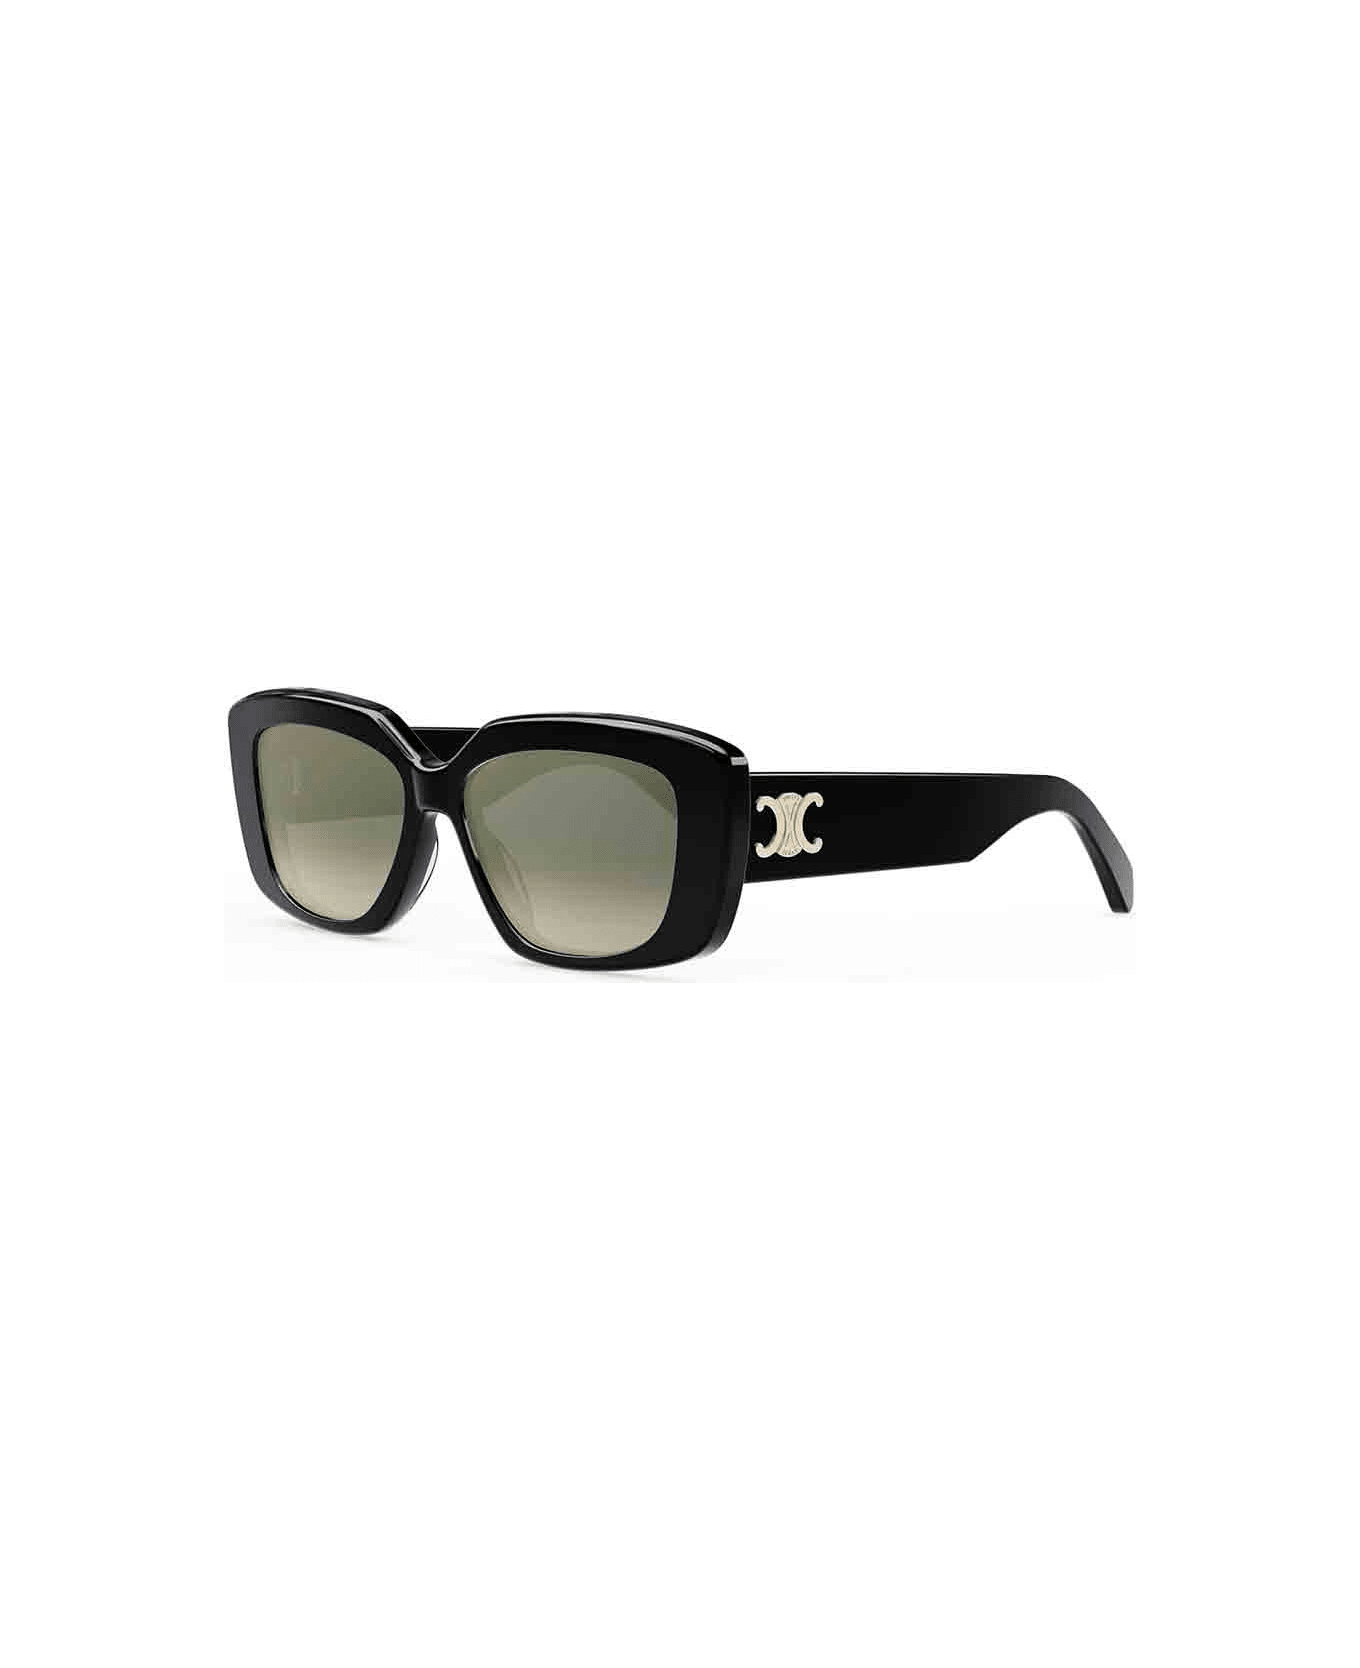 Celine Cat-eye Squared Sunglasses - Nero/Verde サングラス